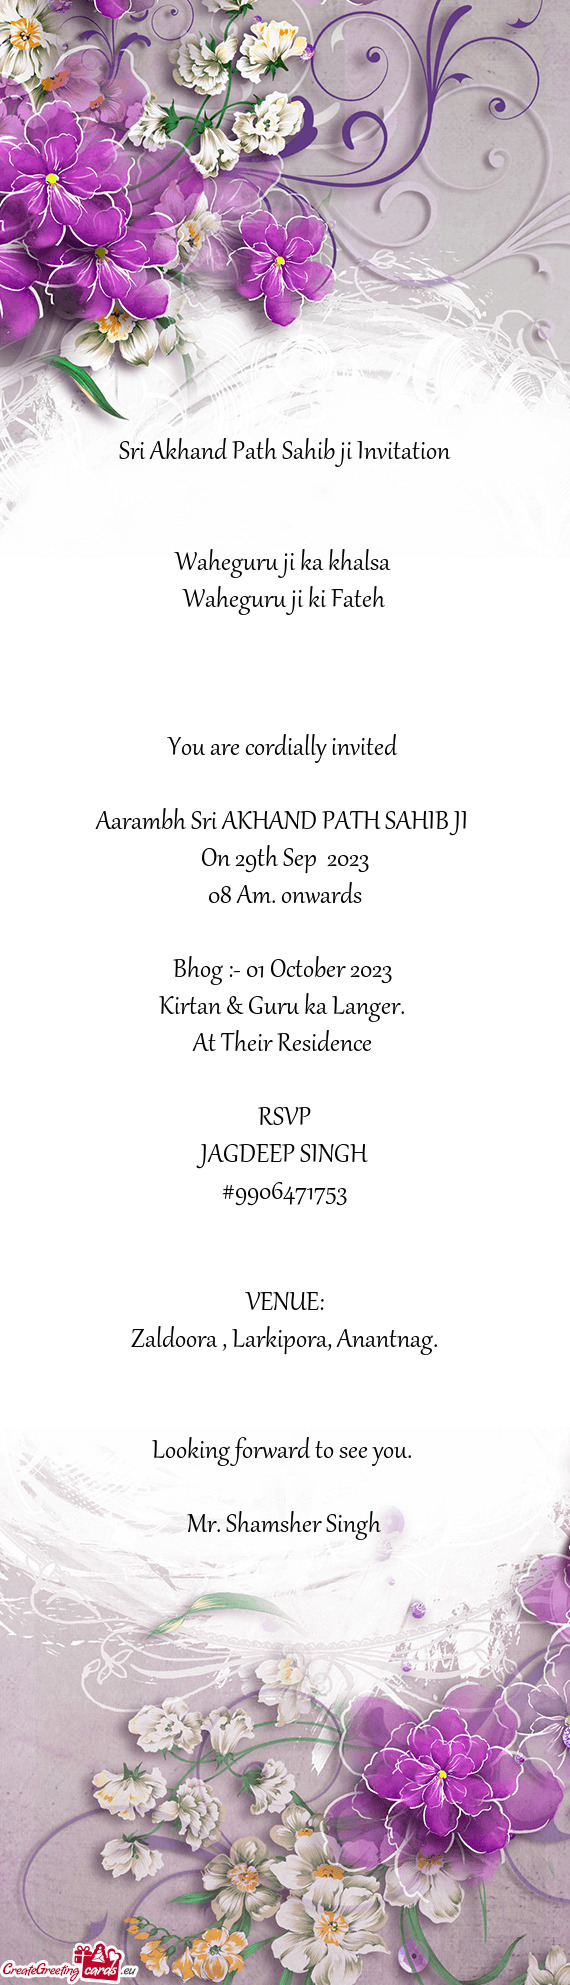 Aarambh Sri AKHAND PATH SAHIB JI